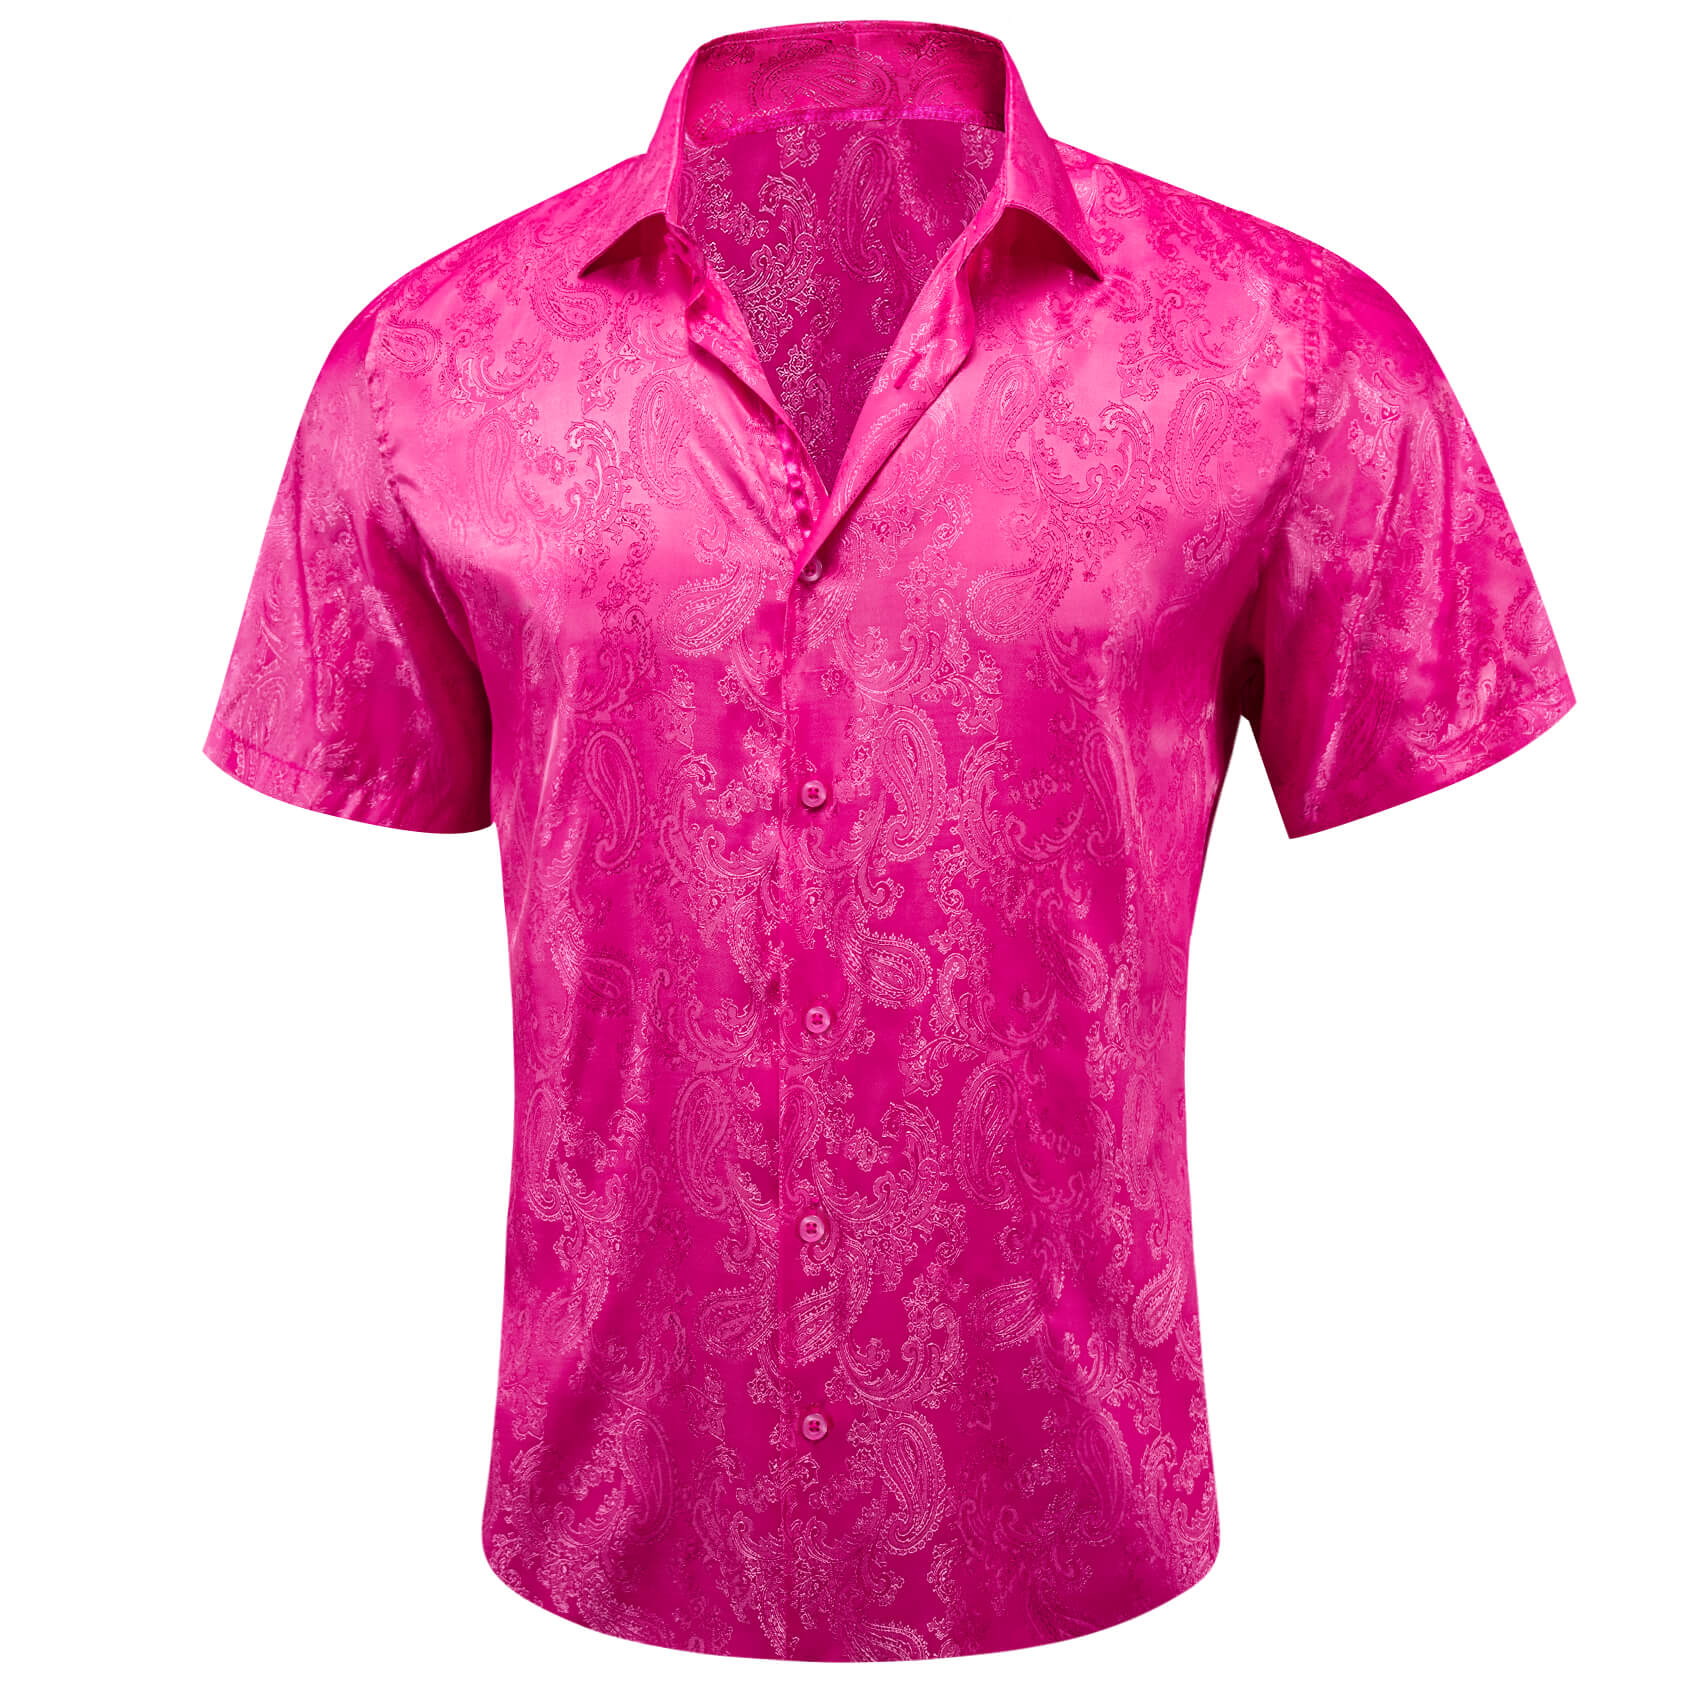  Short Sleeve Shirt Jacquard Paisley Deep Pink Shirt